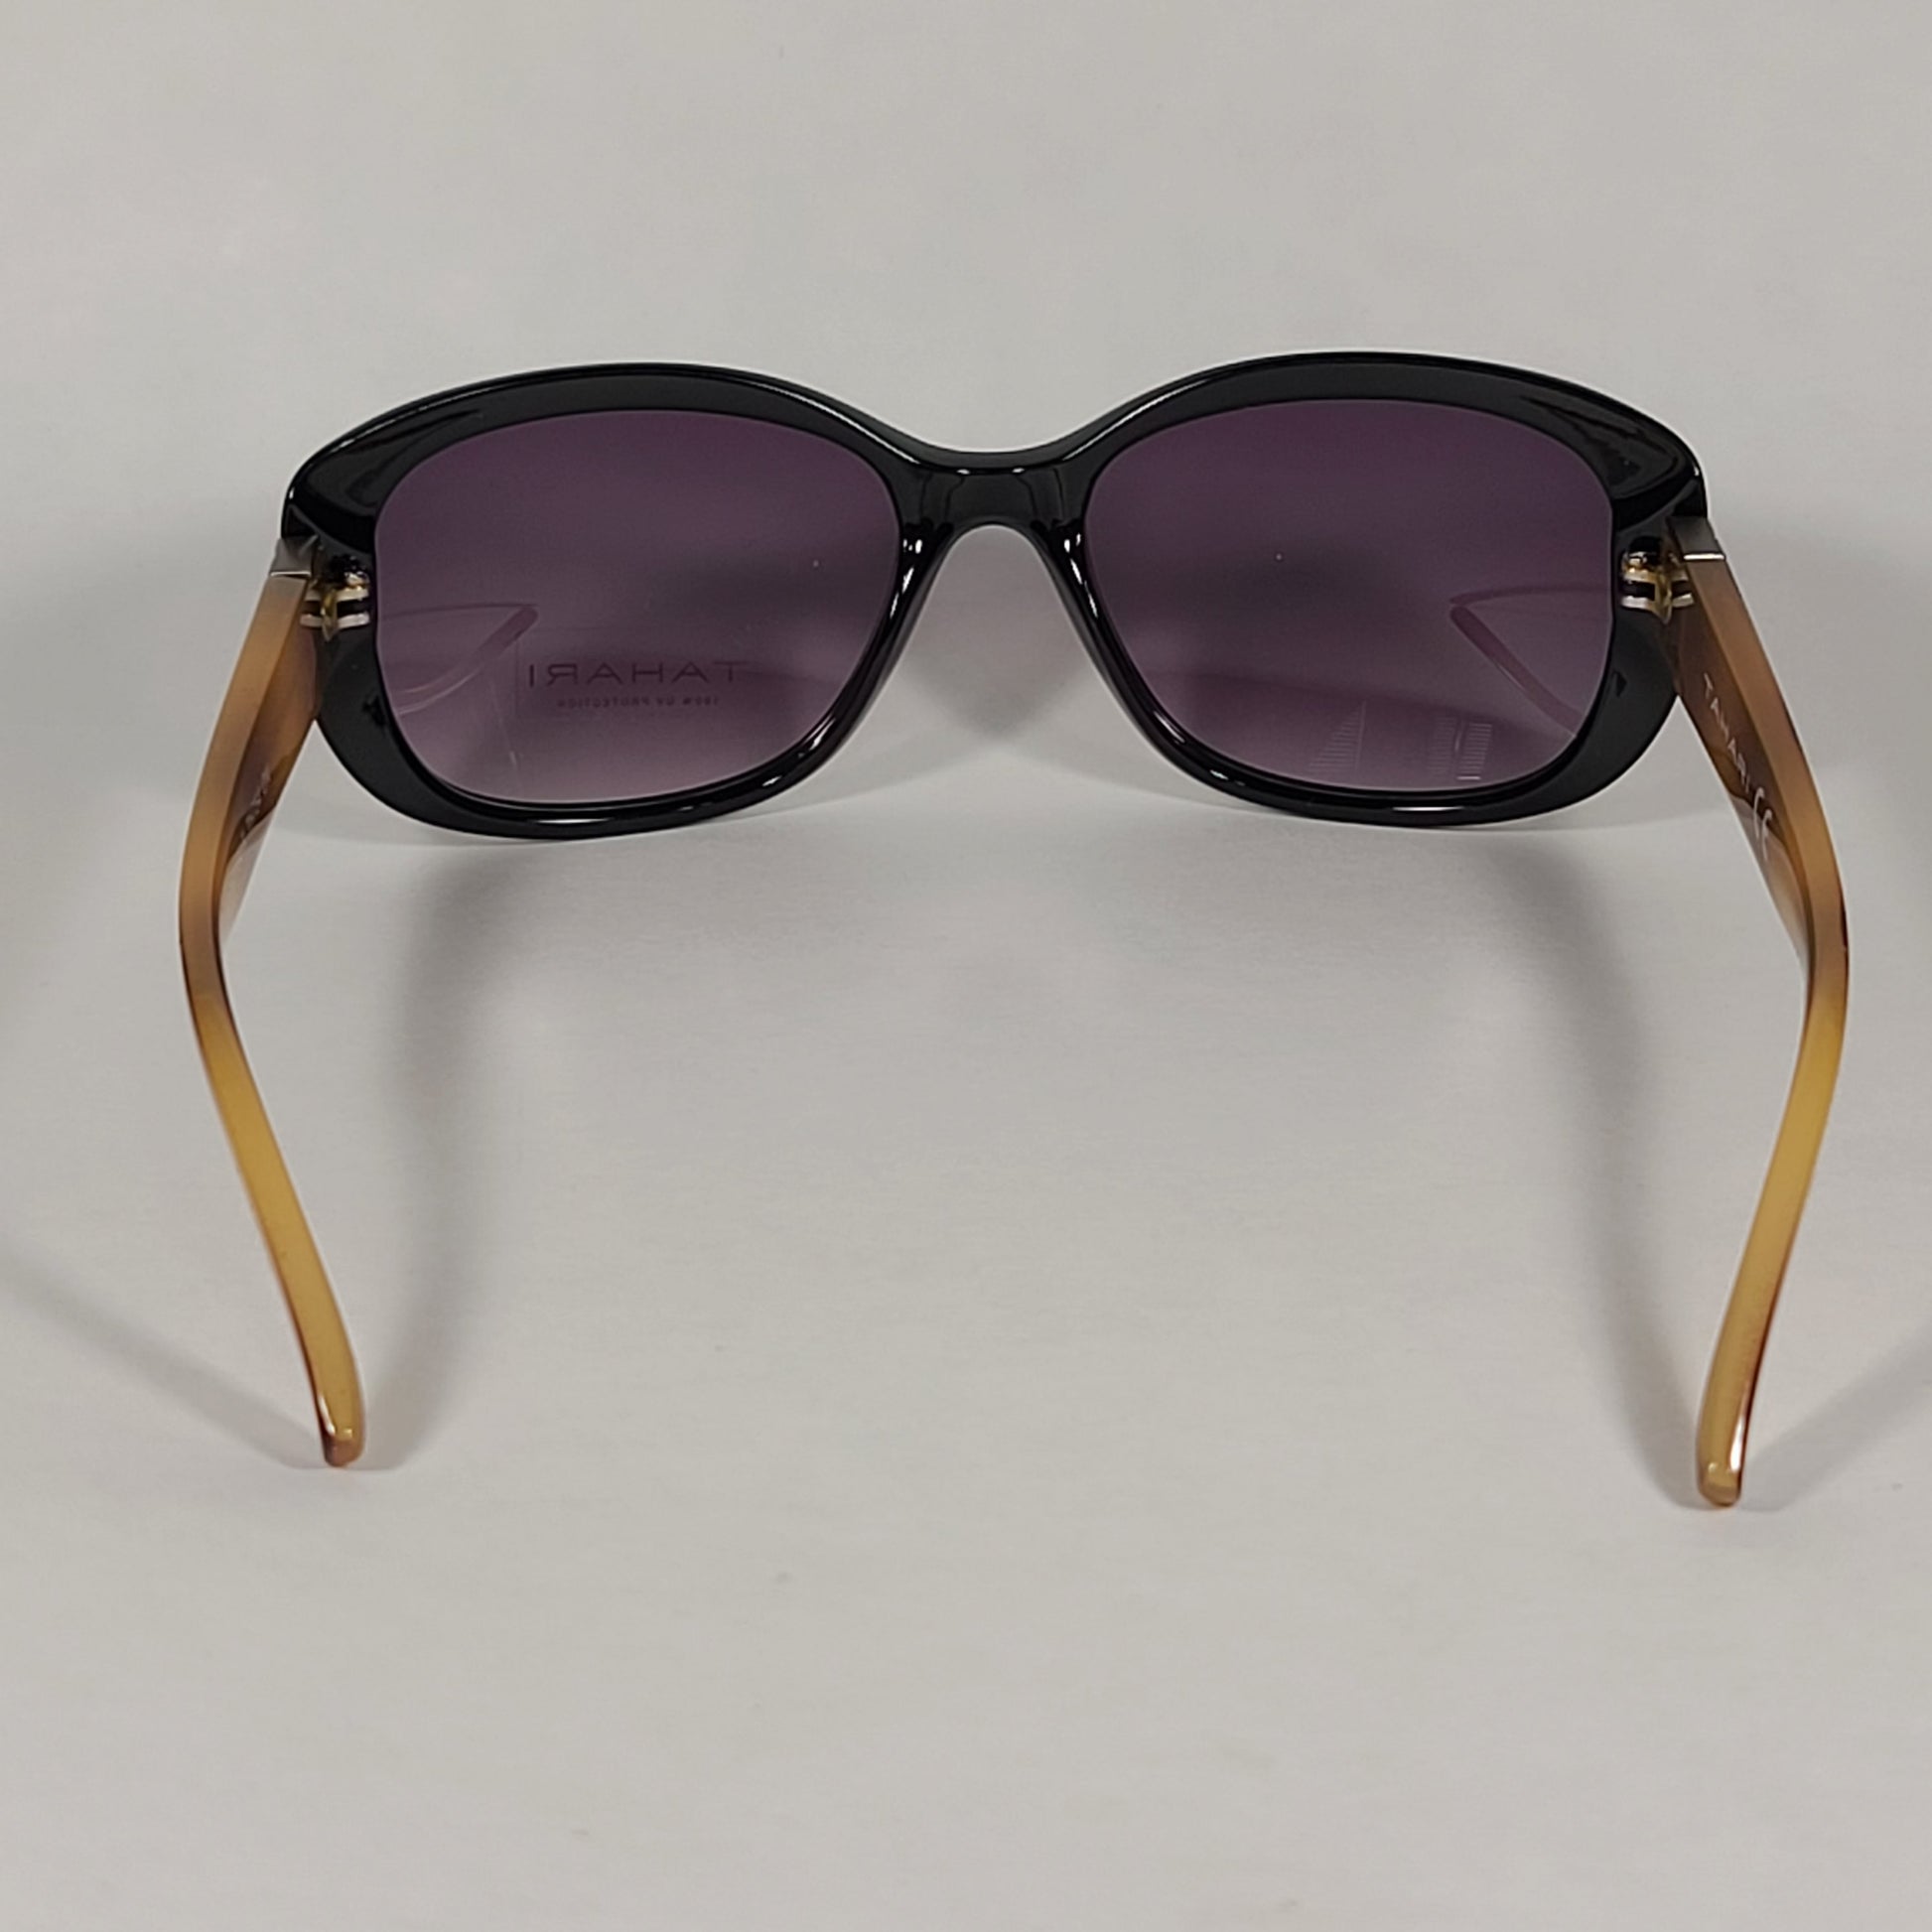 Tahari Oval Sunglasses Black And Light Havana Frame Rhinestone Temples Smoke Lens TH754 OX - Sunglasses